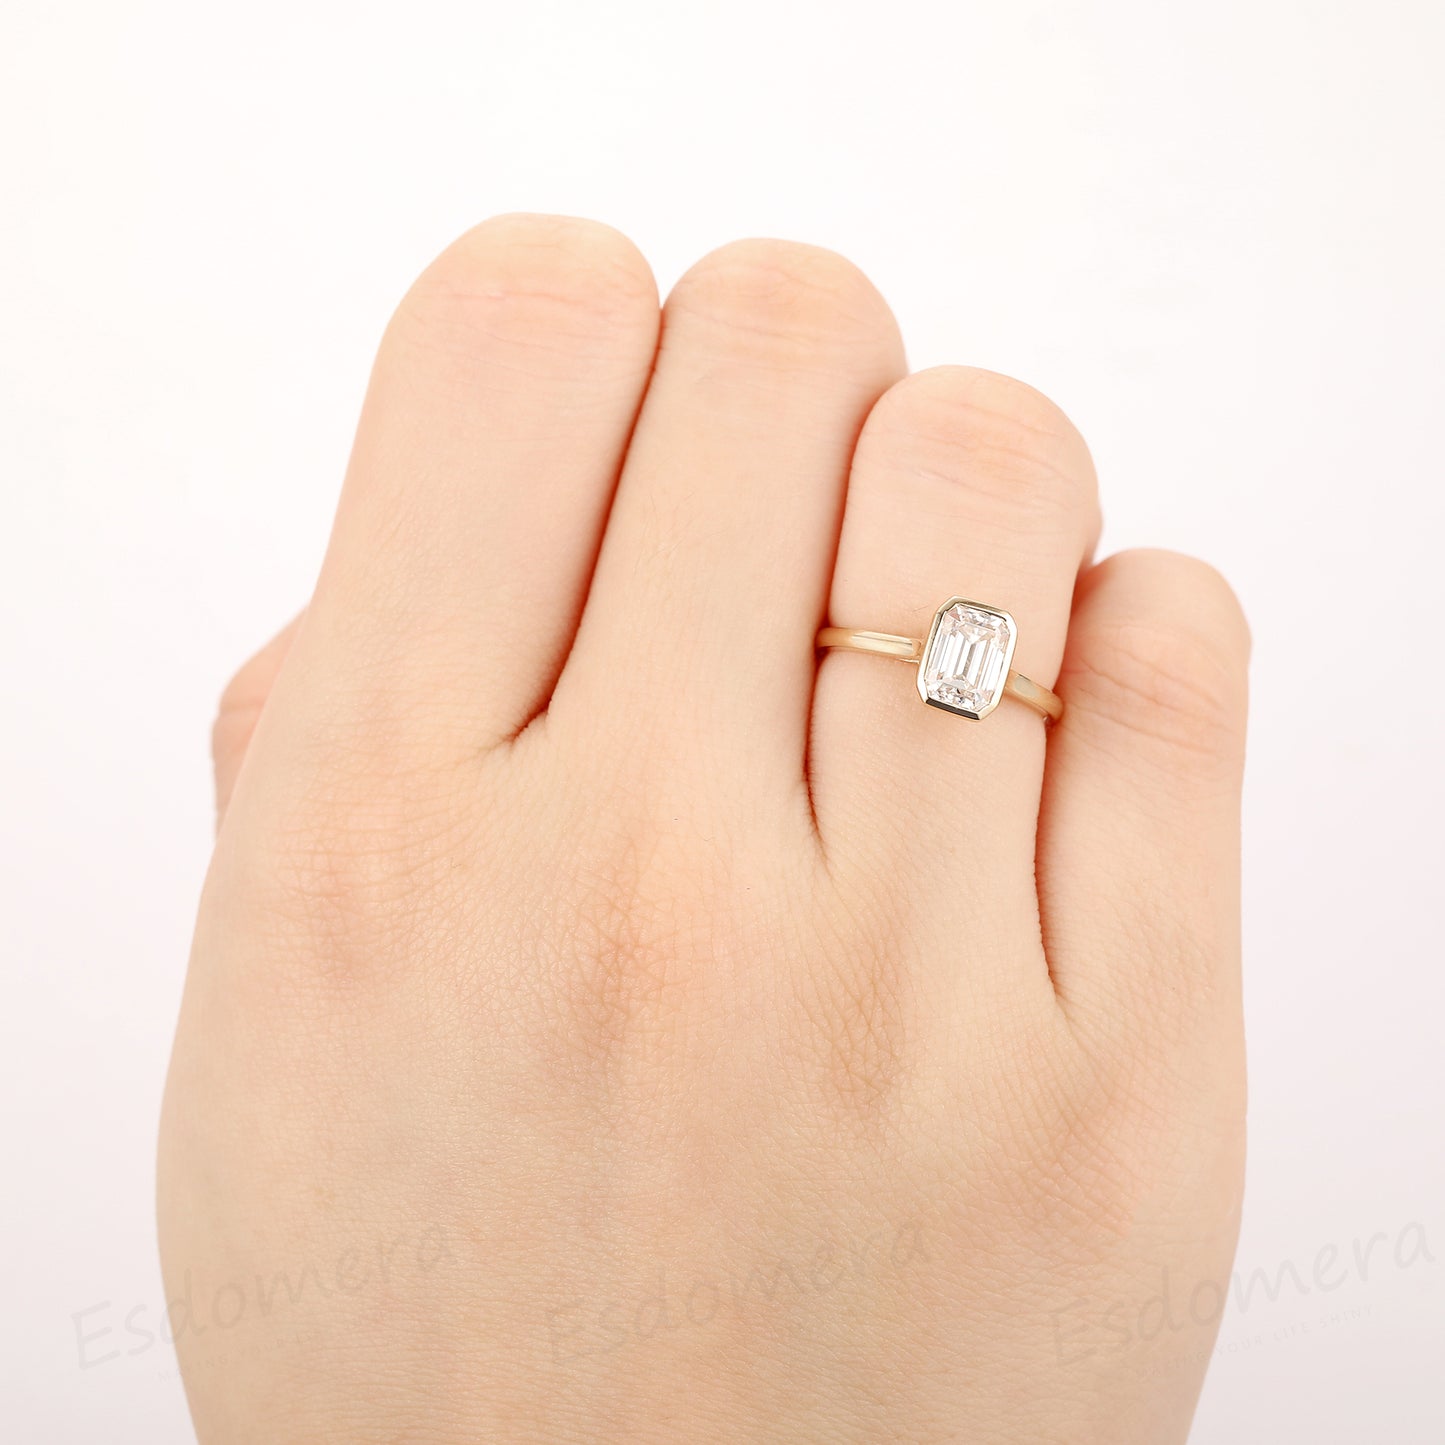 Bezel Setting Ring, 1CT Emerald Cut Moissanite Ring, 14K Yellow Gold Engagement Ring